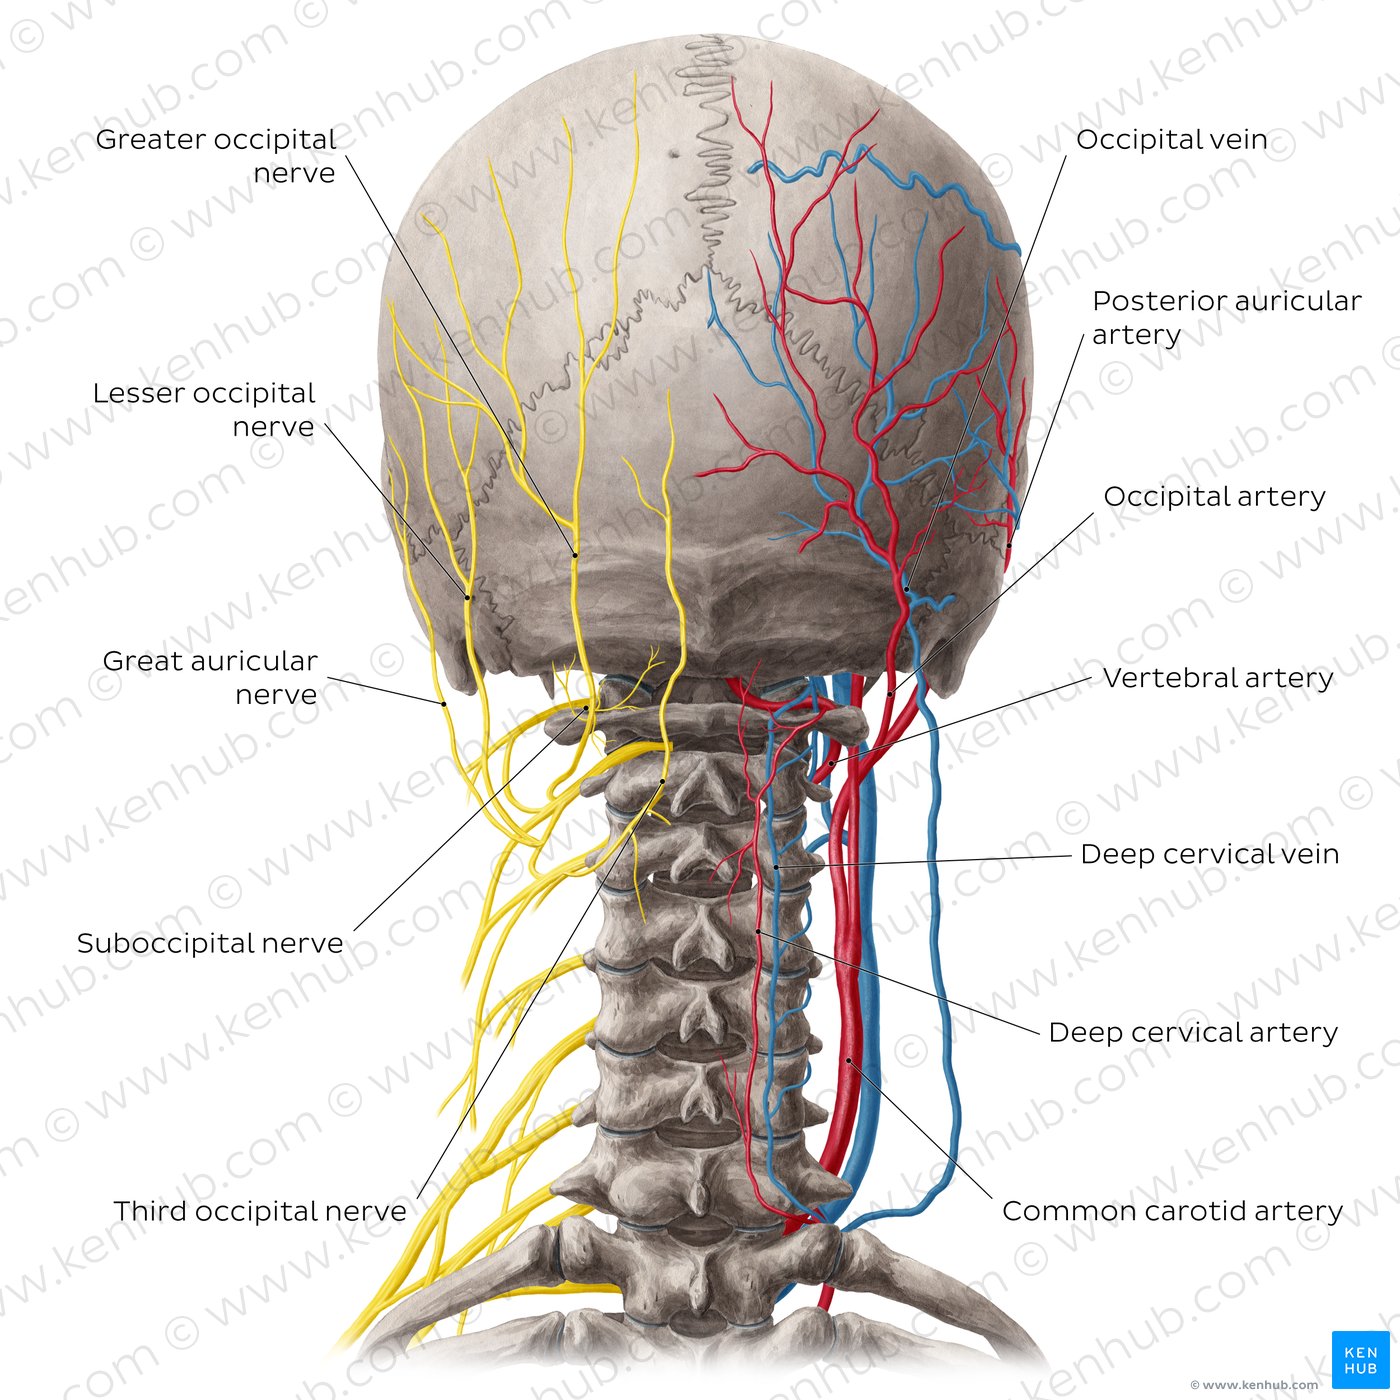 Neurovasculature of the dorsal neck